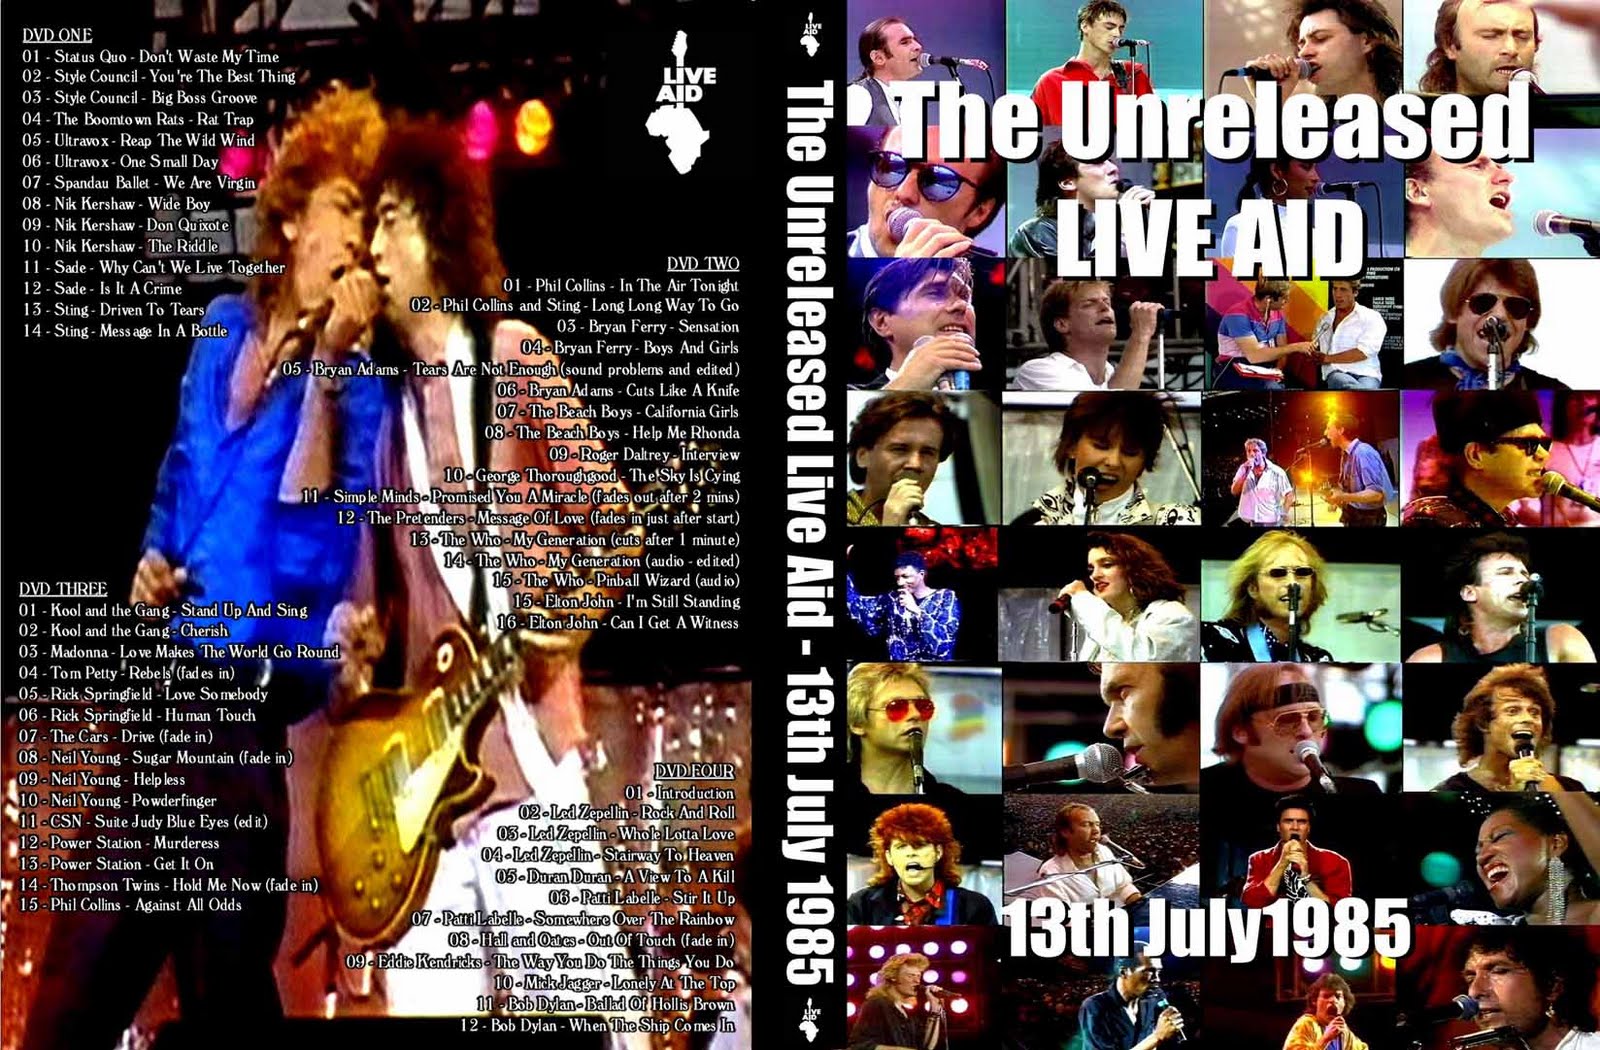 http://1.bp.blogspot.com/-WIBgZsb-nkk/Tid_zAxzoQI/AAAAAAAADH8/T5sNo6BAtUw/s1600/DVD+Cover+-+The+Unreleased+Live+Aid+DVD+2.jpg